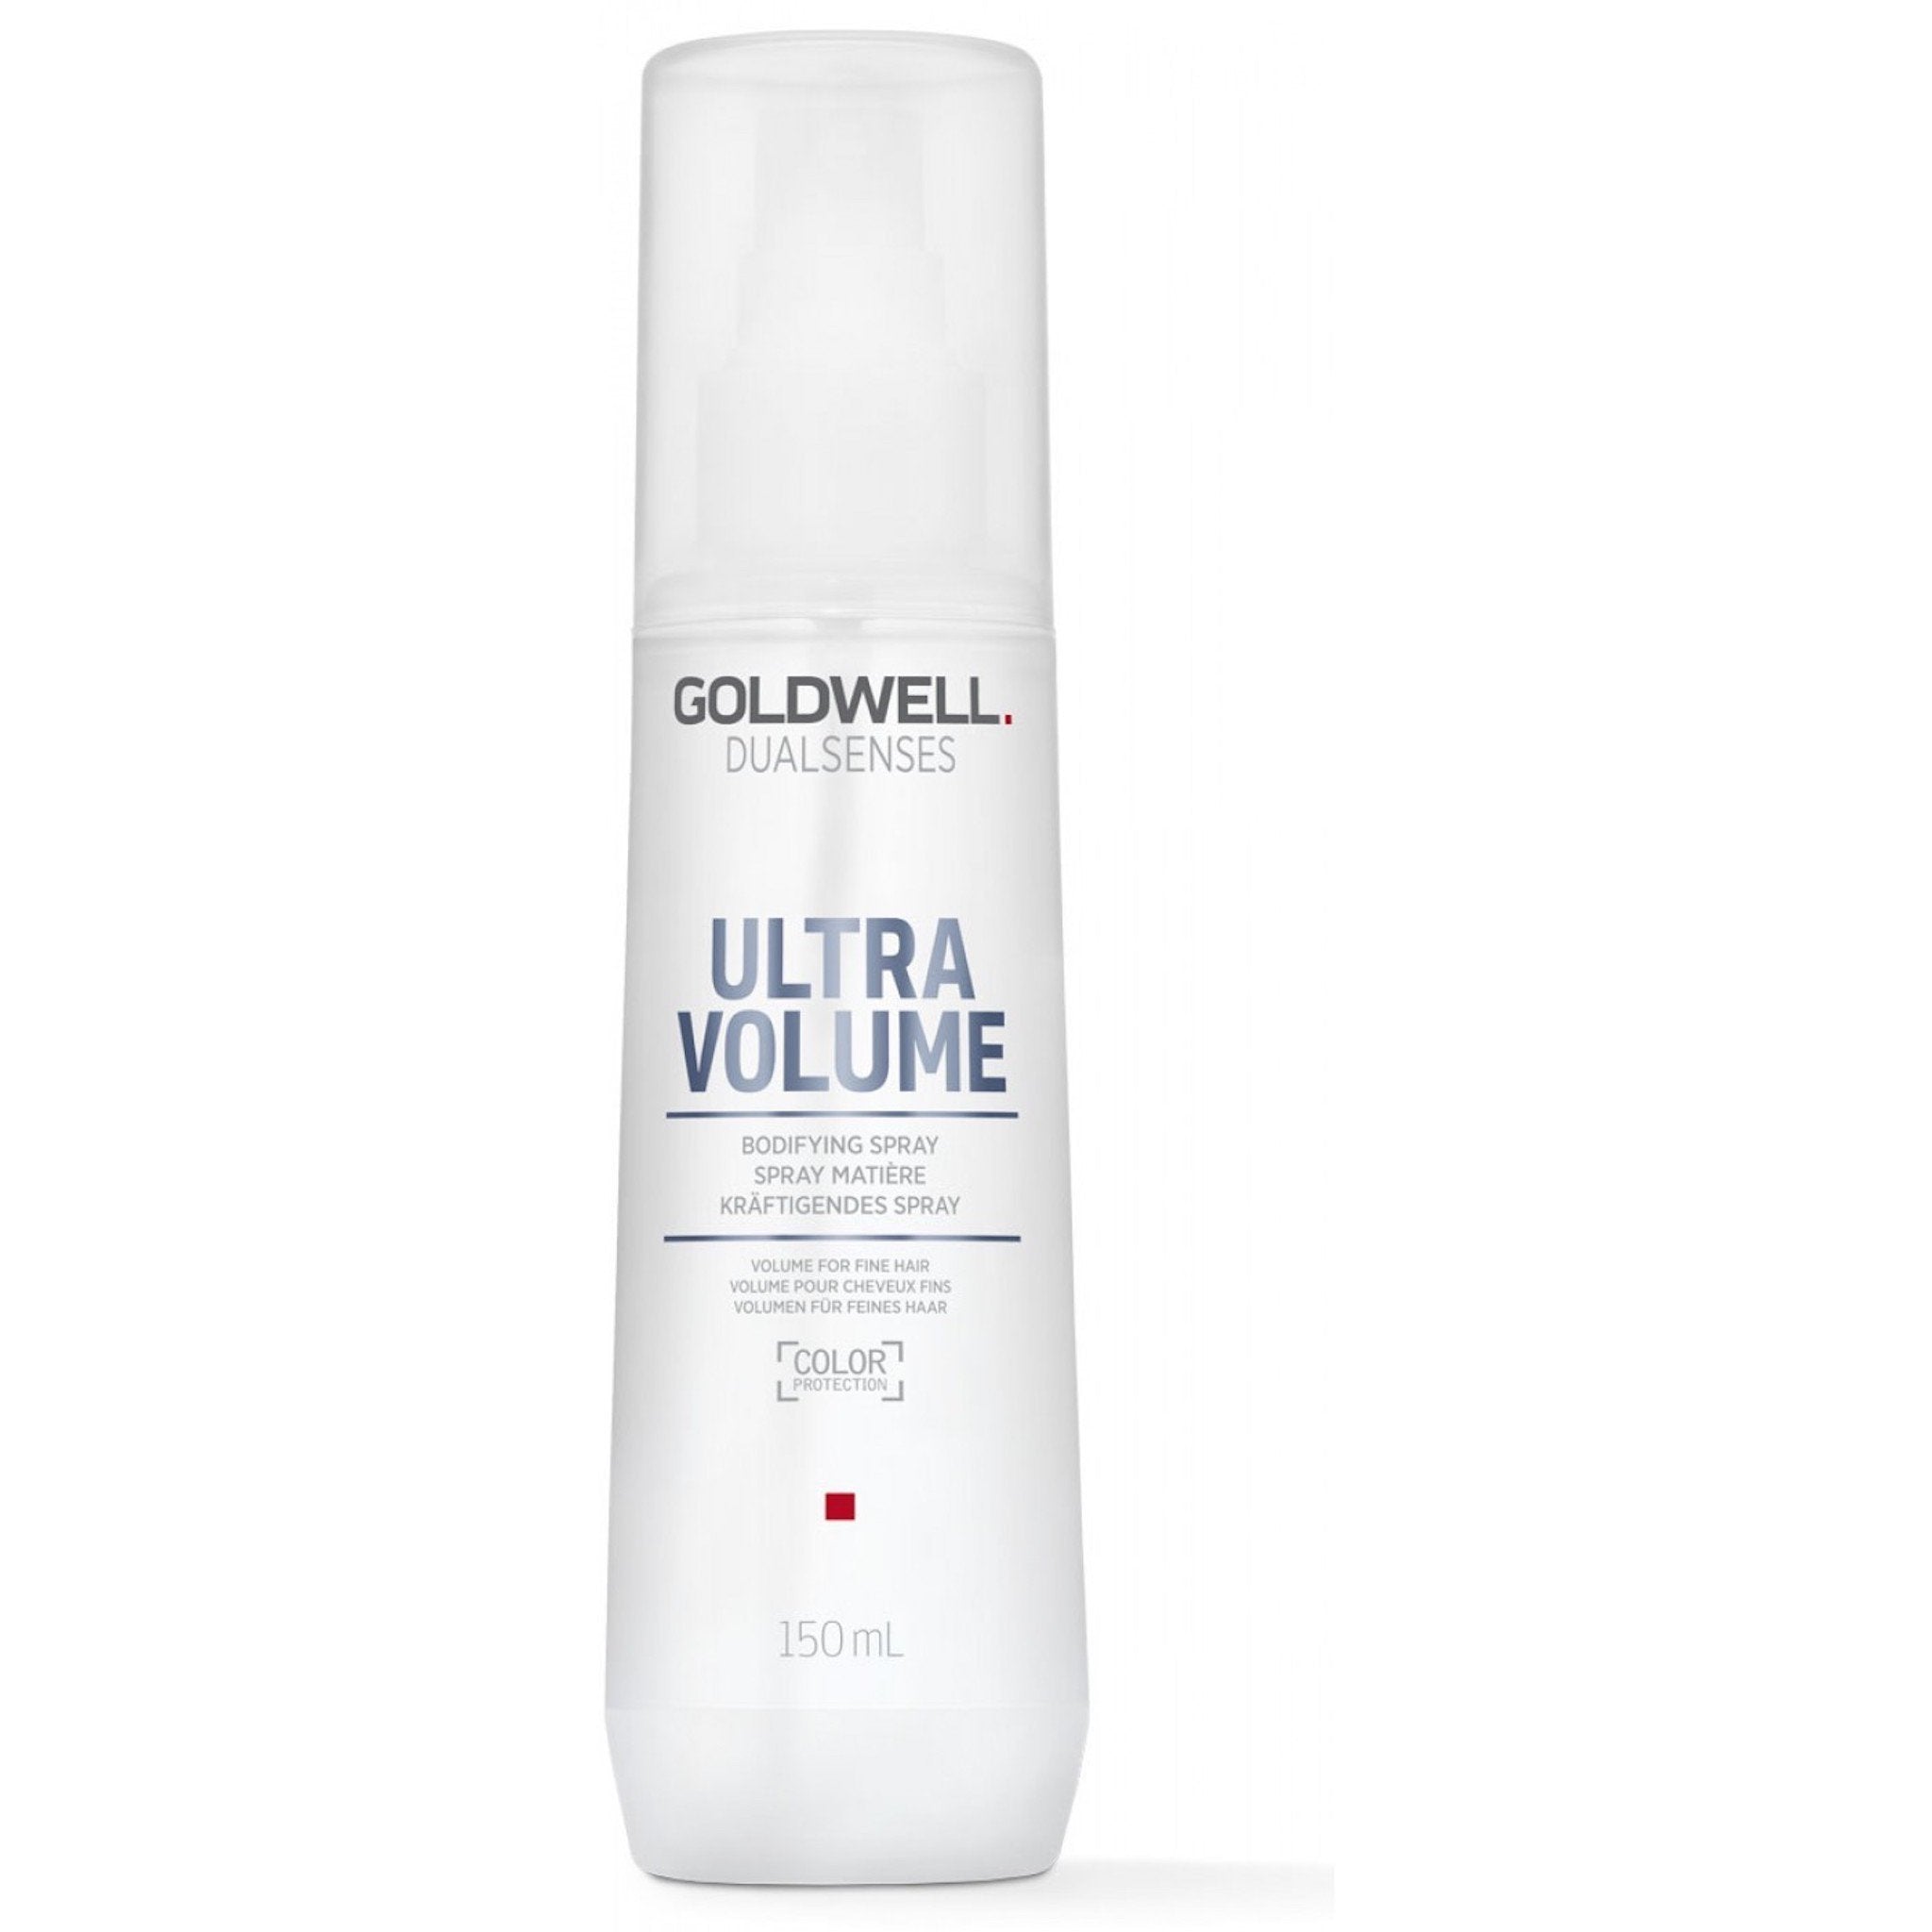 Goldwell. Ultra Volume Spray Bonifiant - 150 ml - Concept C. Shop